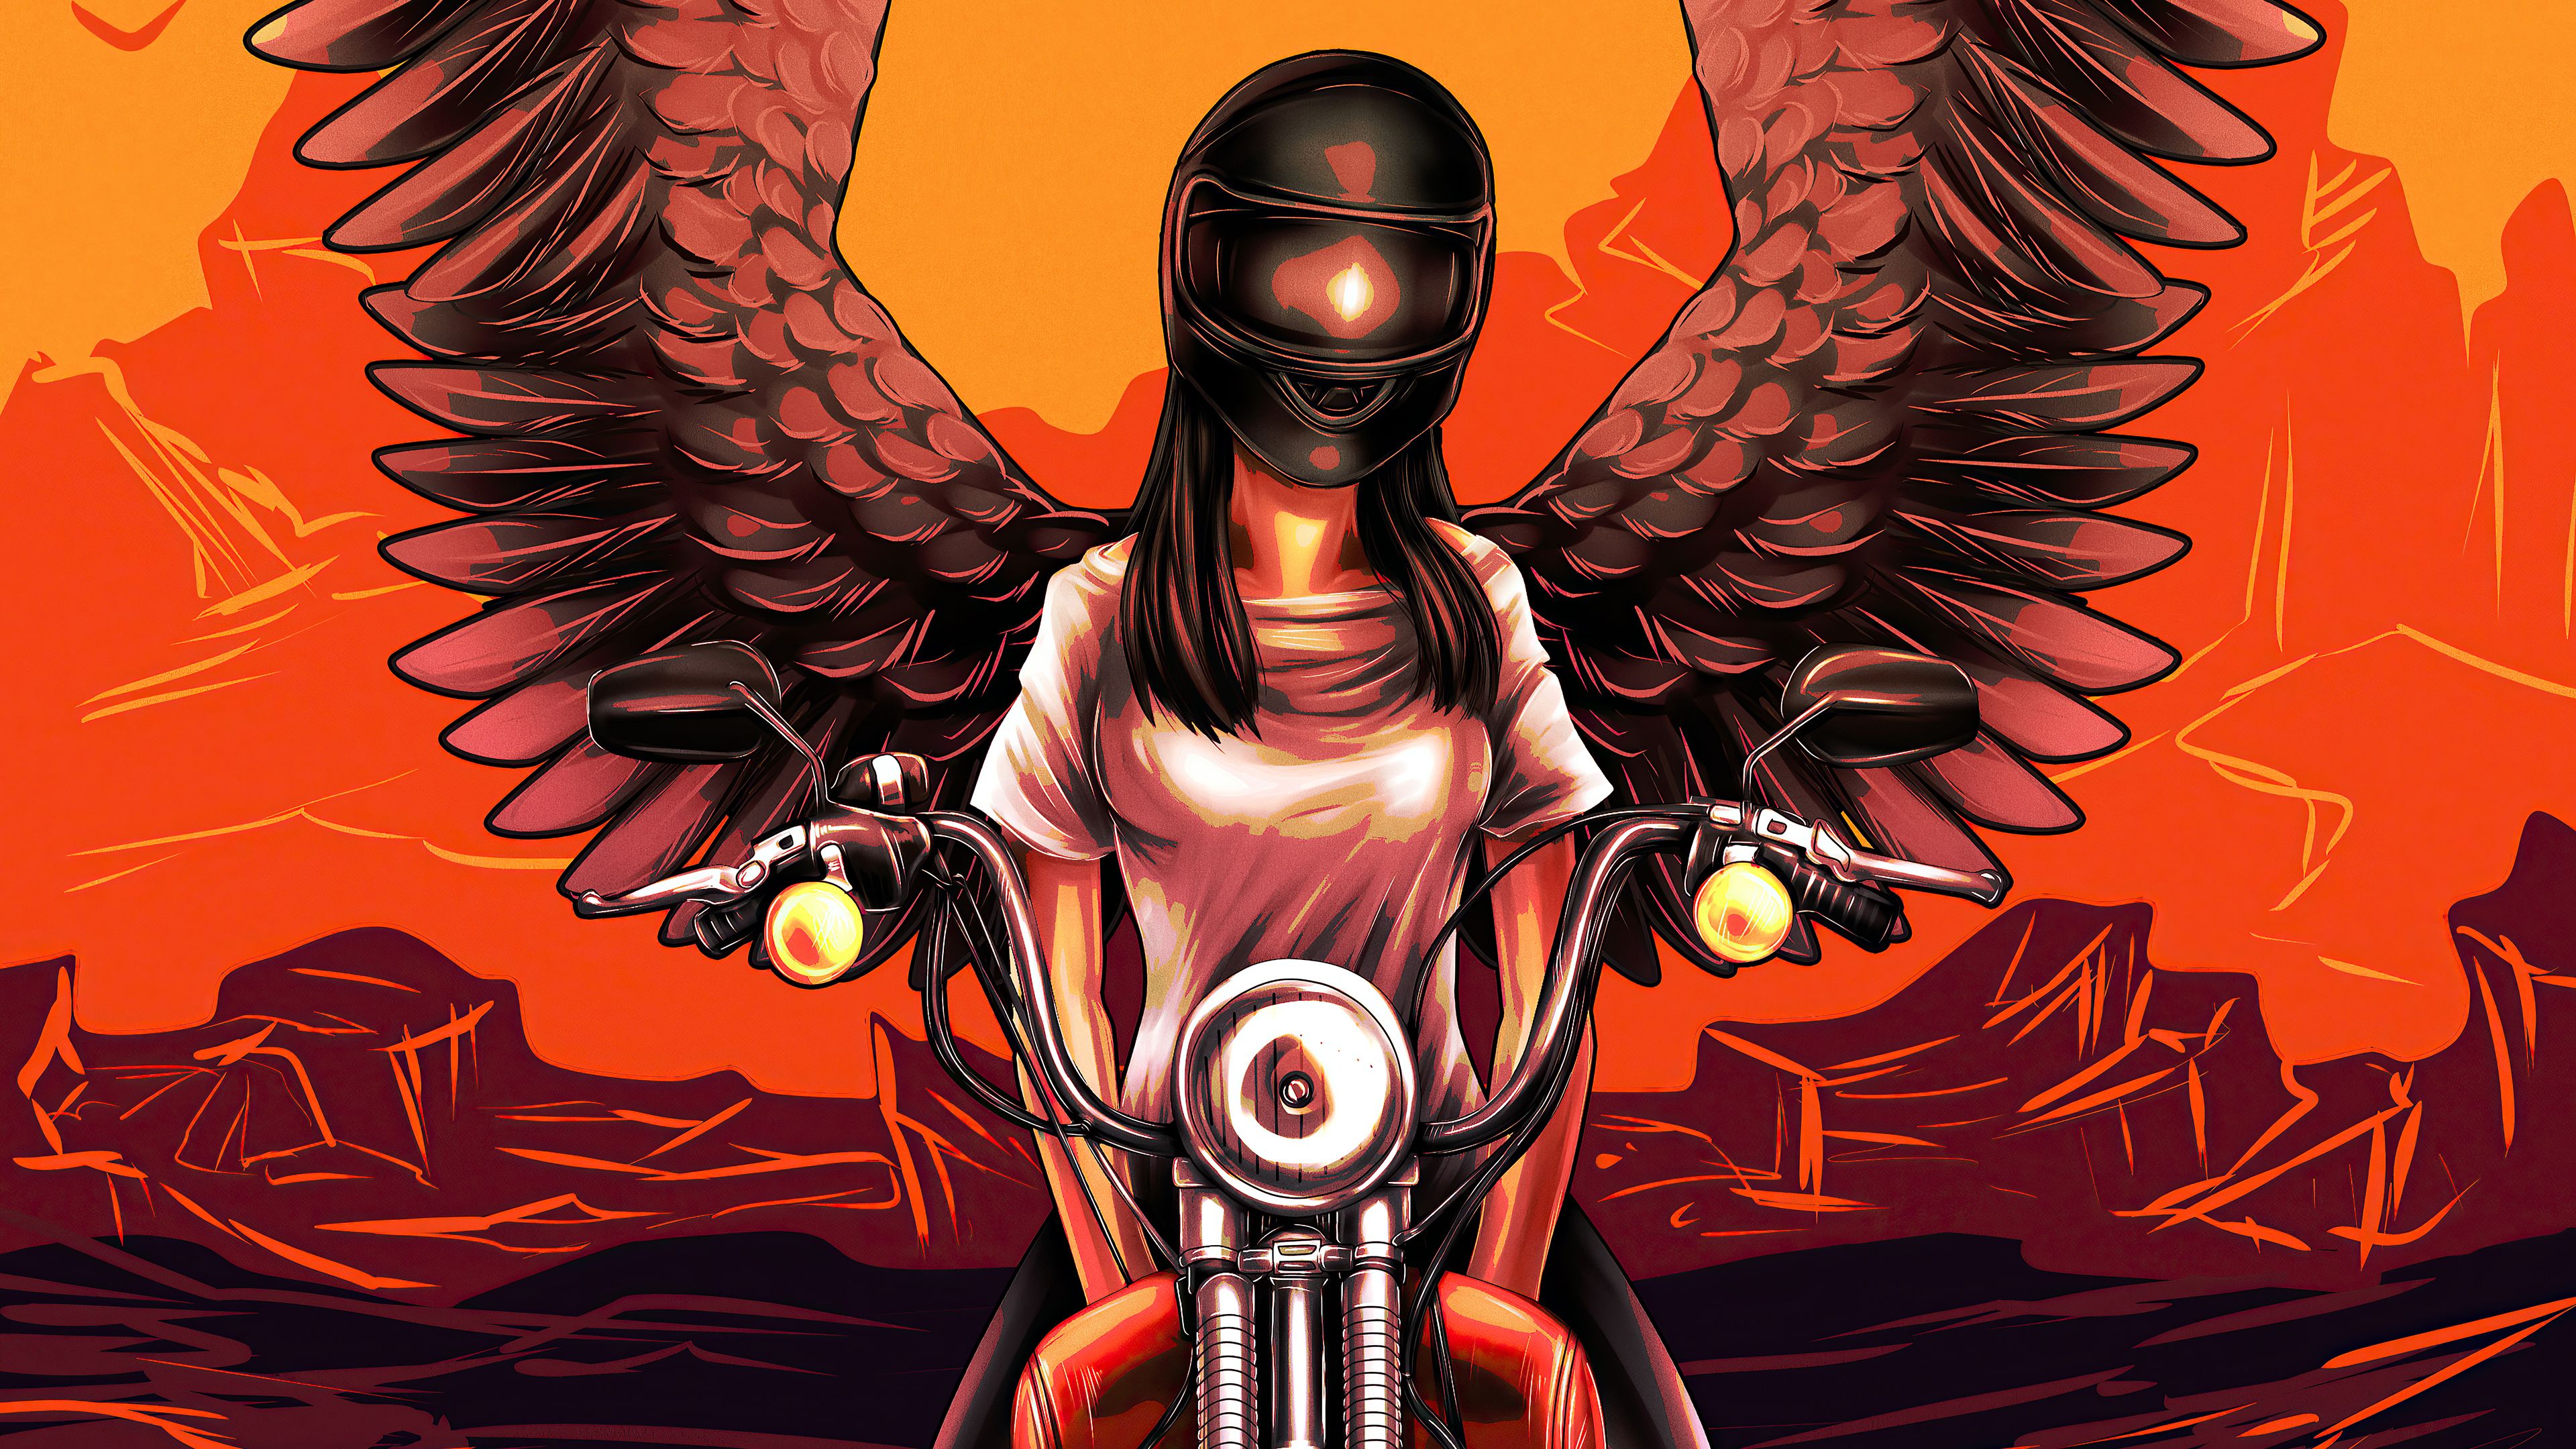 Devil Biker Angel Girl 4k, HD Artist, 4k Wallpaper, Image, Background, Photo and Picture